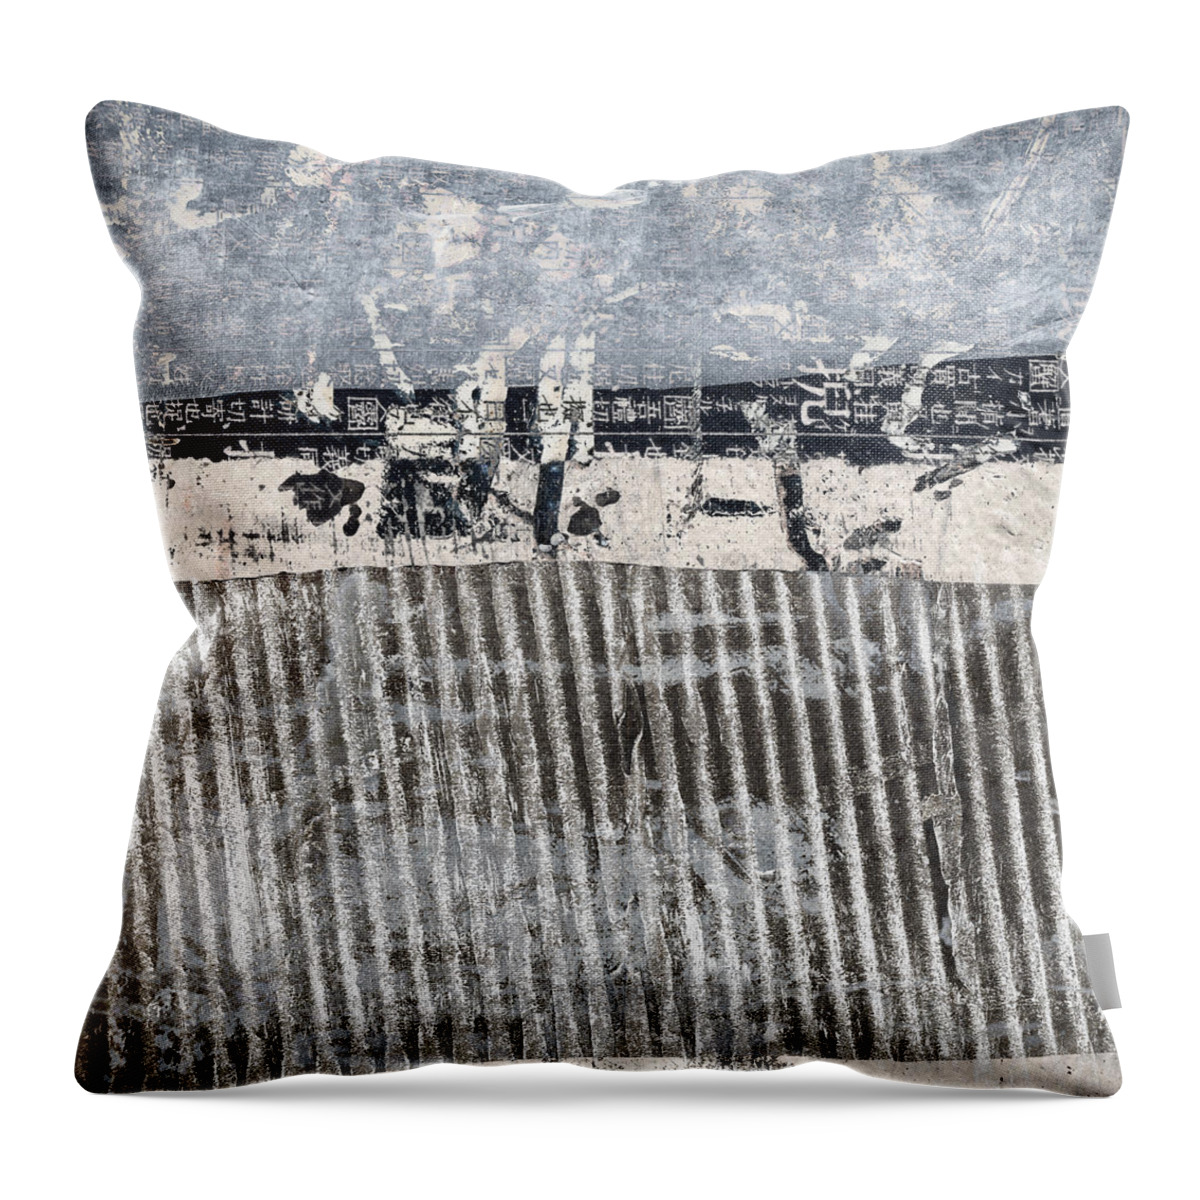 Beach Throw Pillow featuring the photograph Beach Barrier Abstract by Carol Leigh